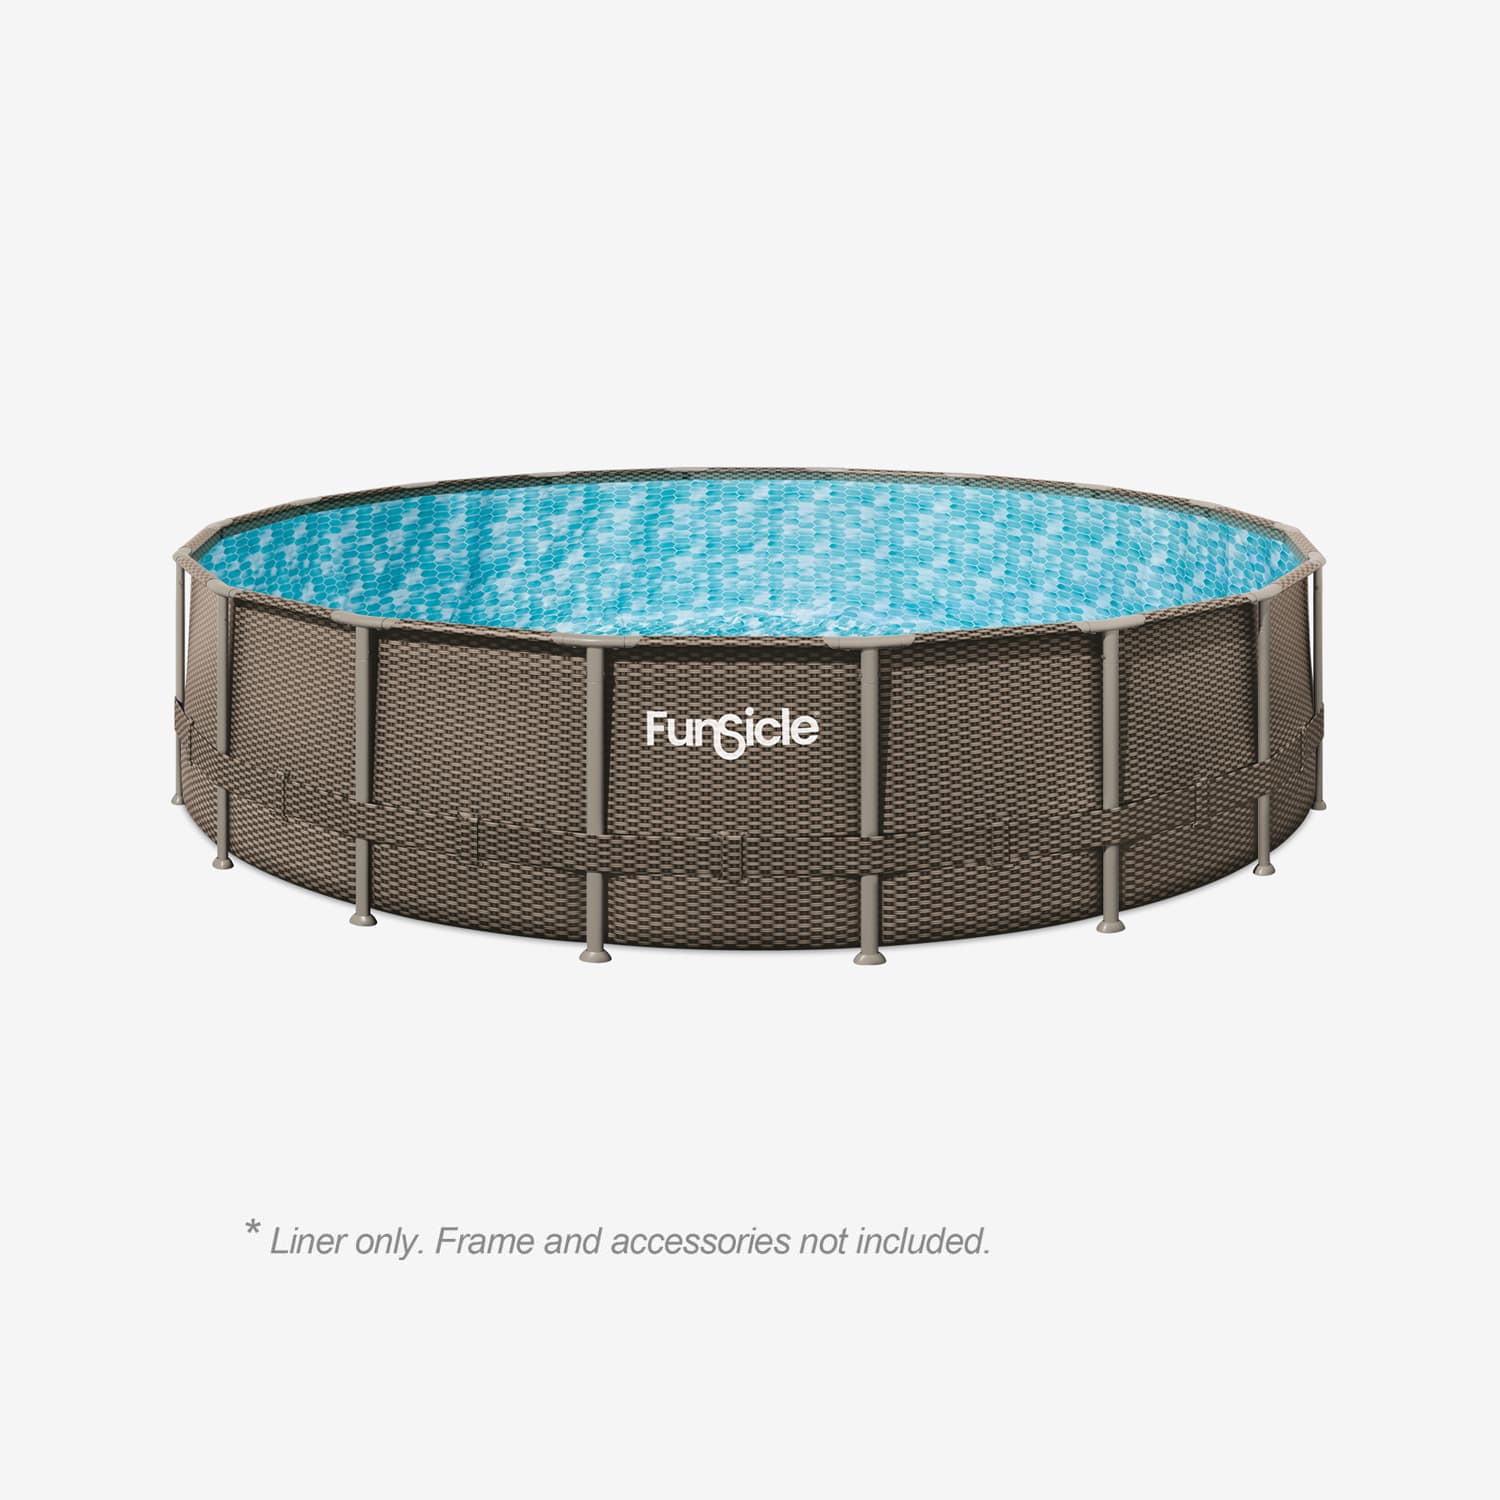 Funsicle 18 ft Oasis Designer Pool Liner– Dark Double Rattan